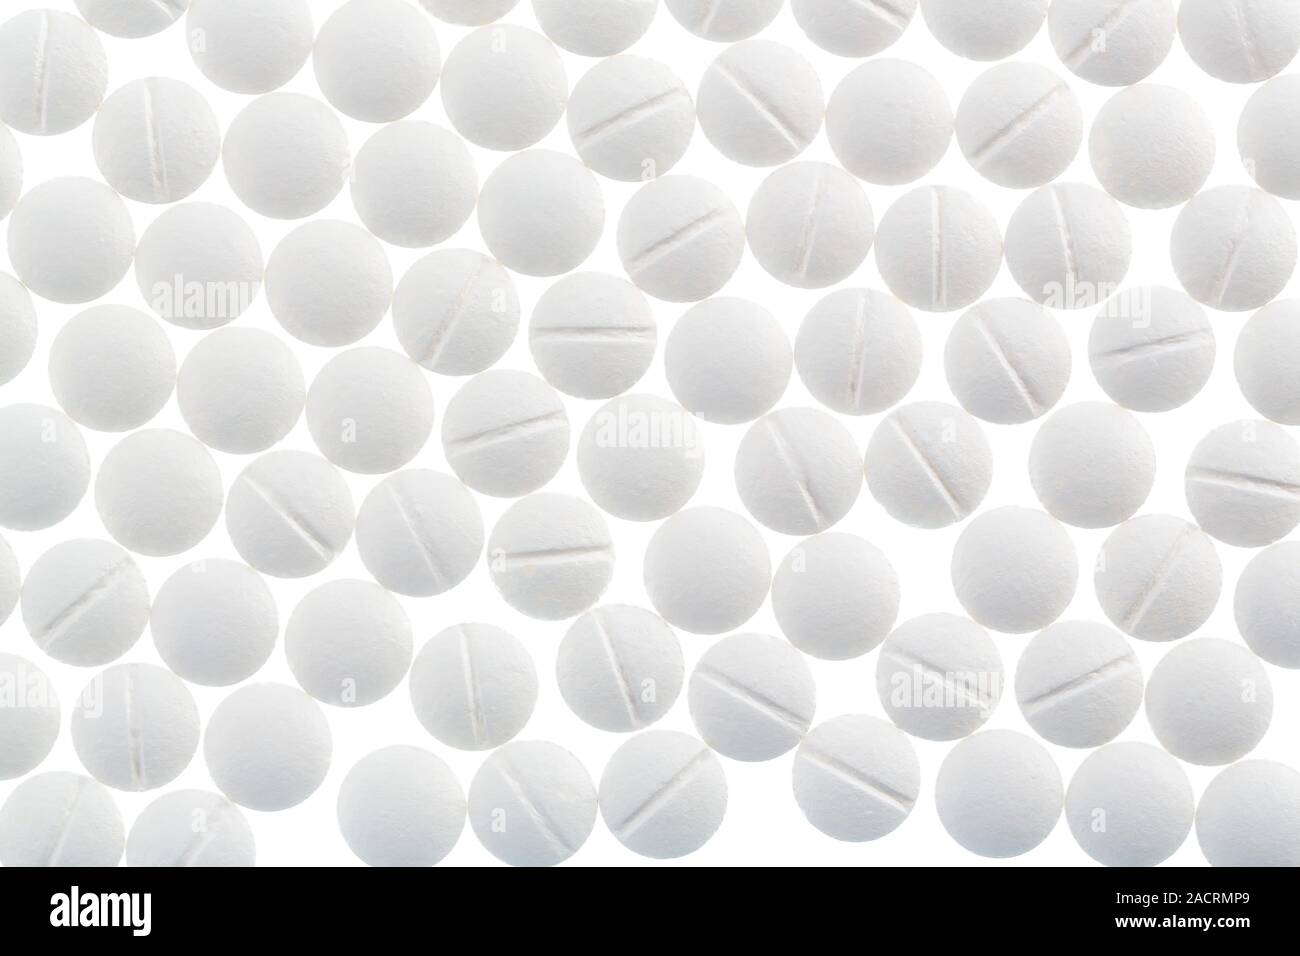 White tablets in abundance Stock Photo